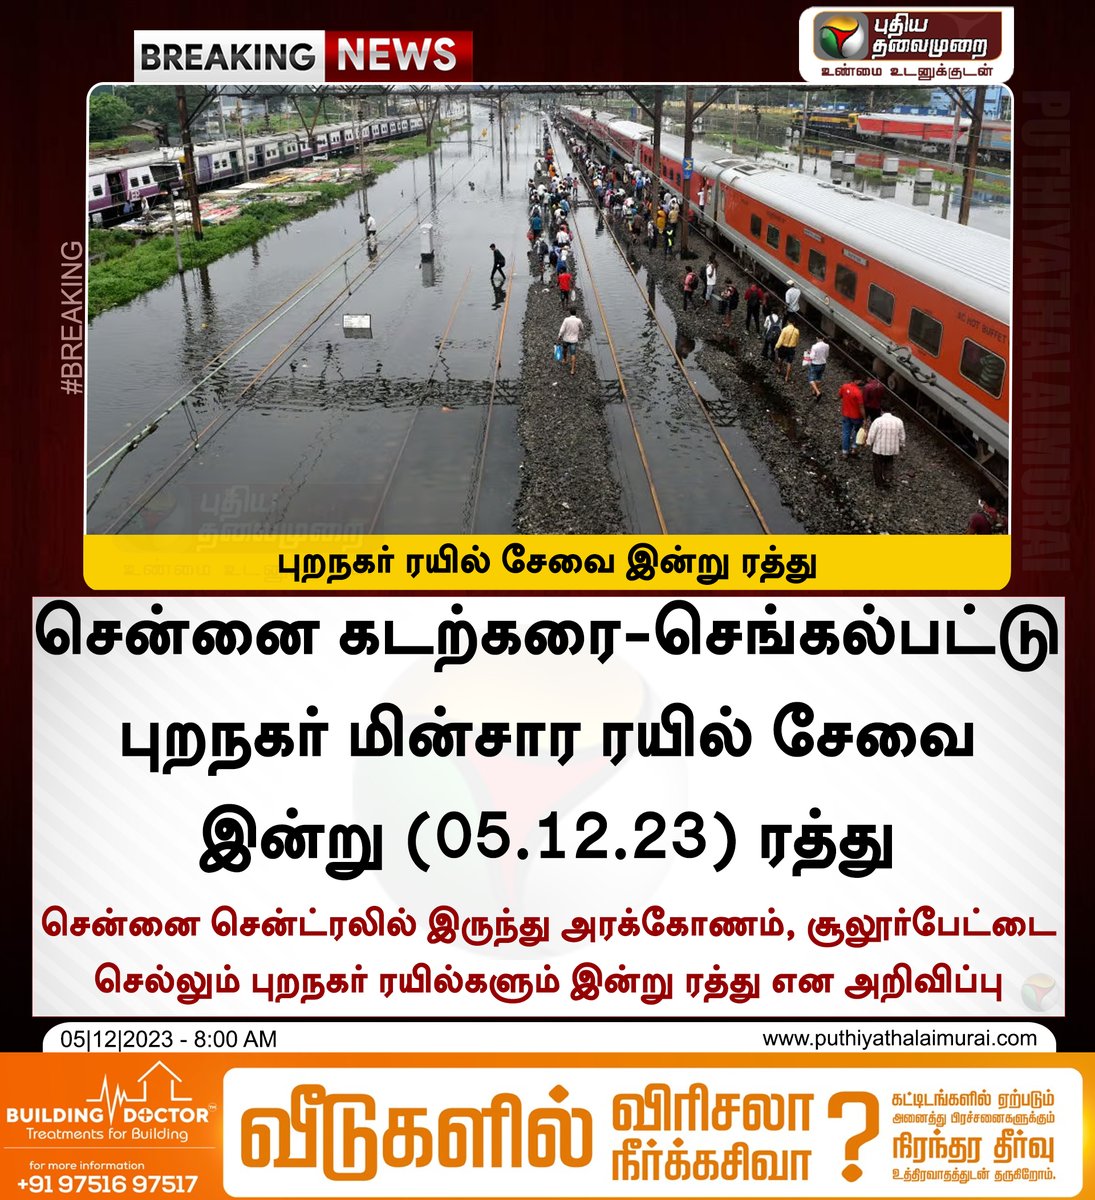 #BREAKING | புறநகர் ரயில் சேவை இன்று ரத்து

#TNRains | #ChennaiRains | #CycloneMichaung | #Cyclone | #TrainCancel